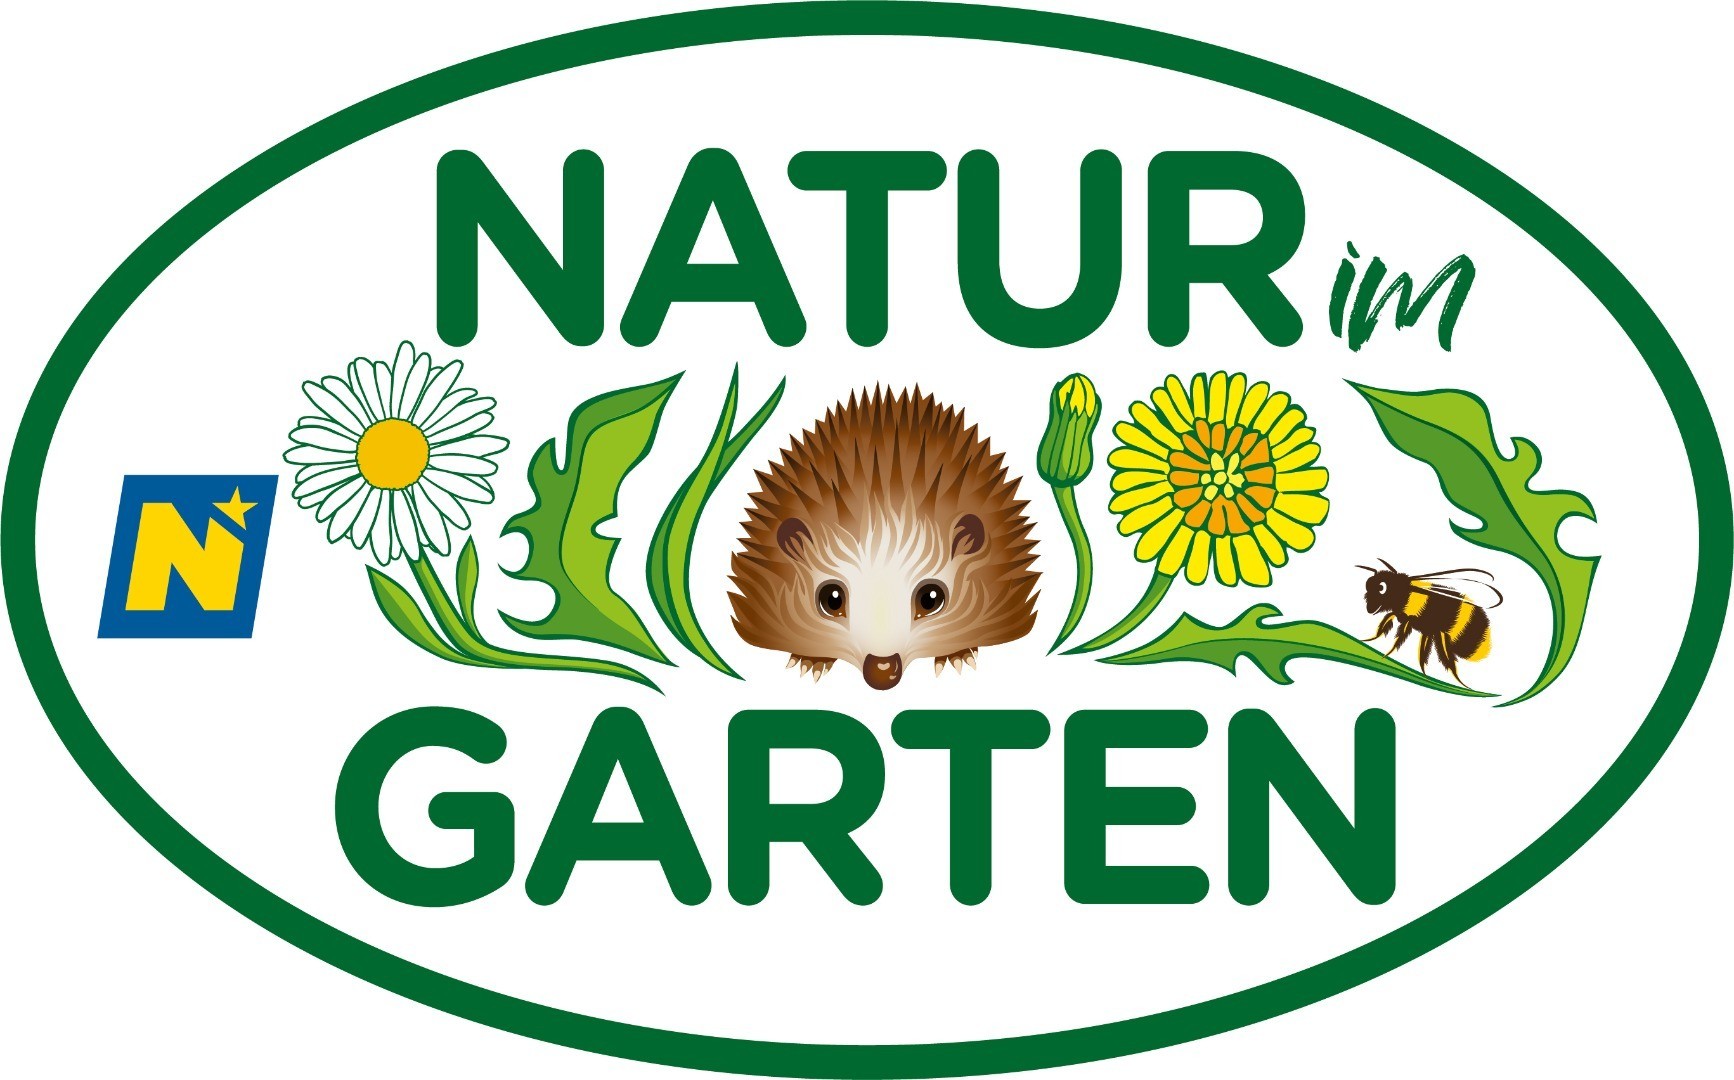 Natur_im_Garten_logo.jpg